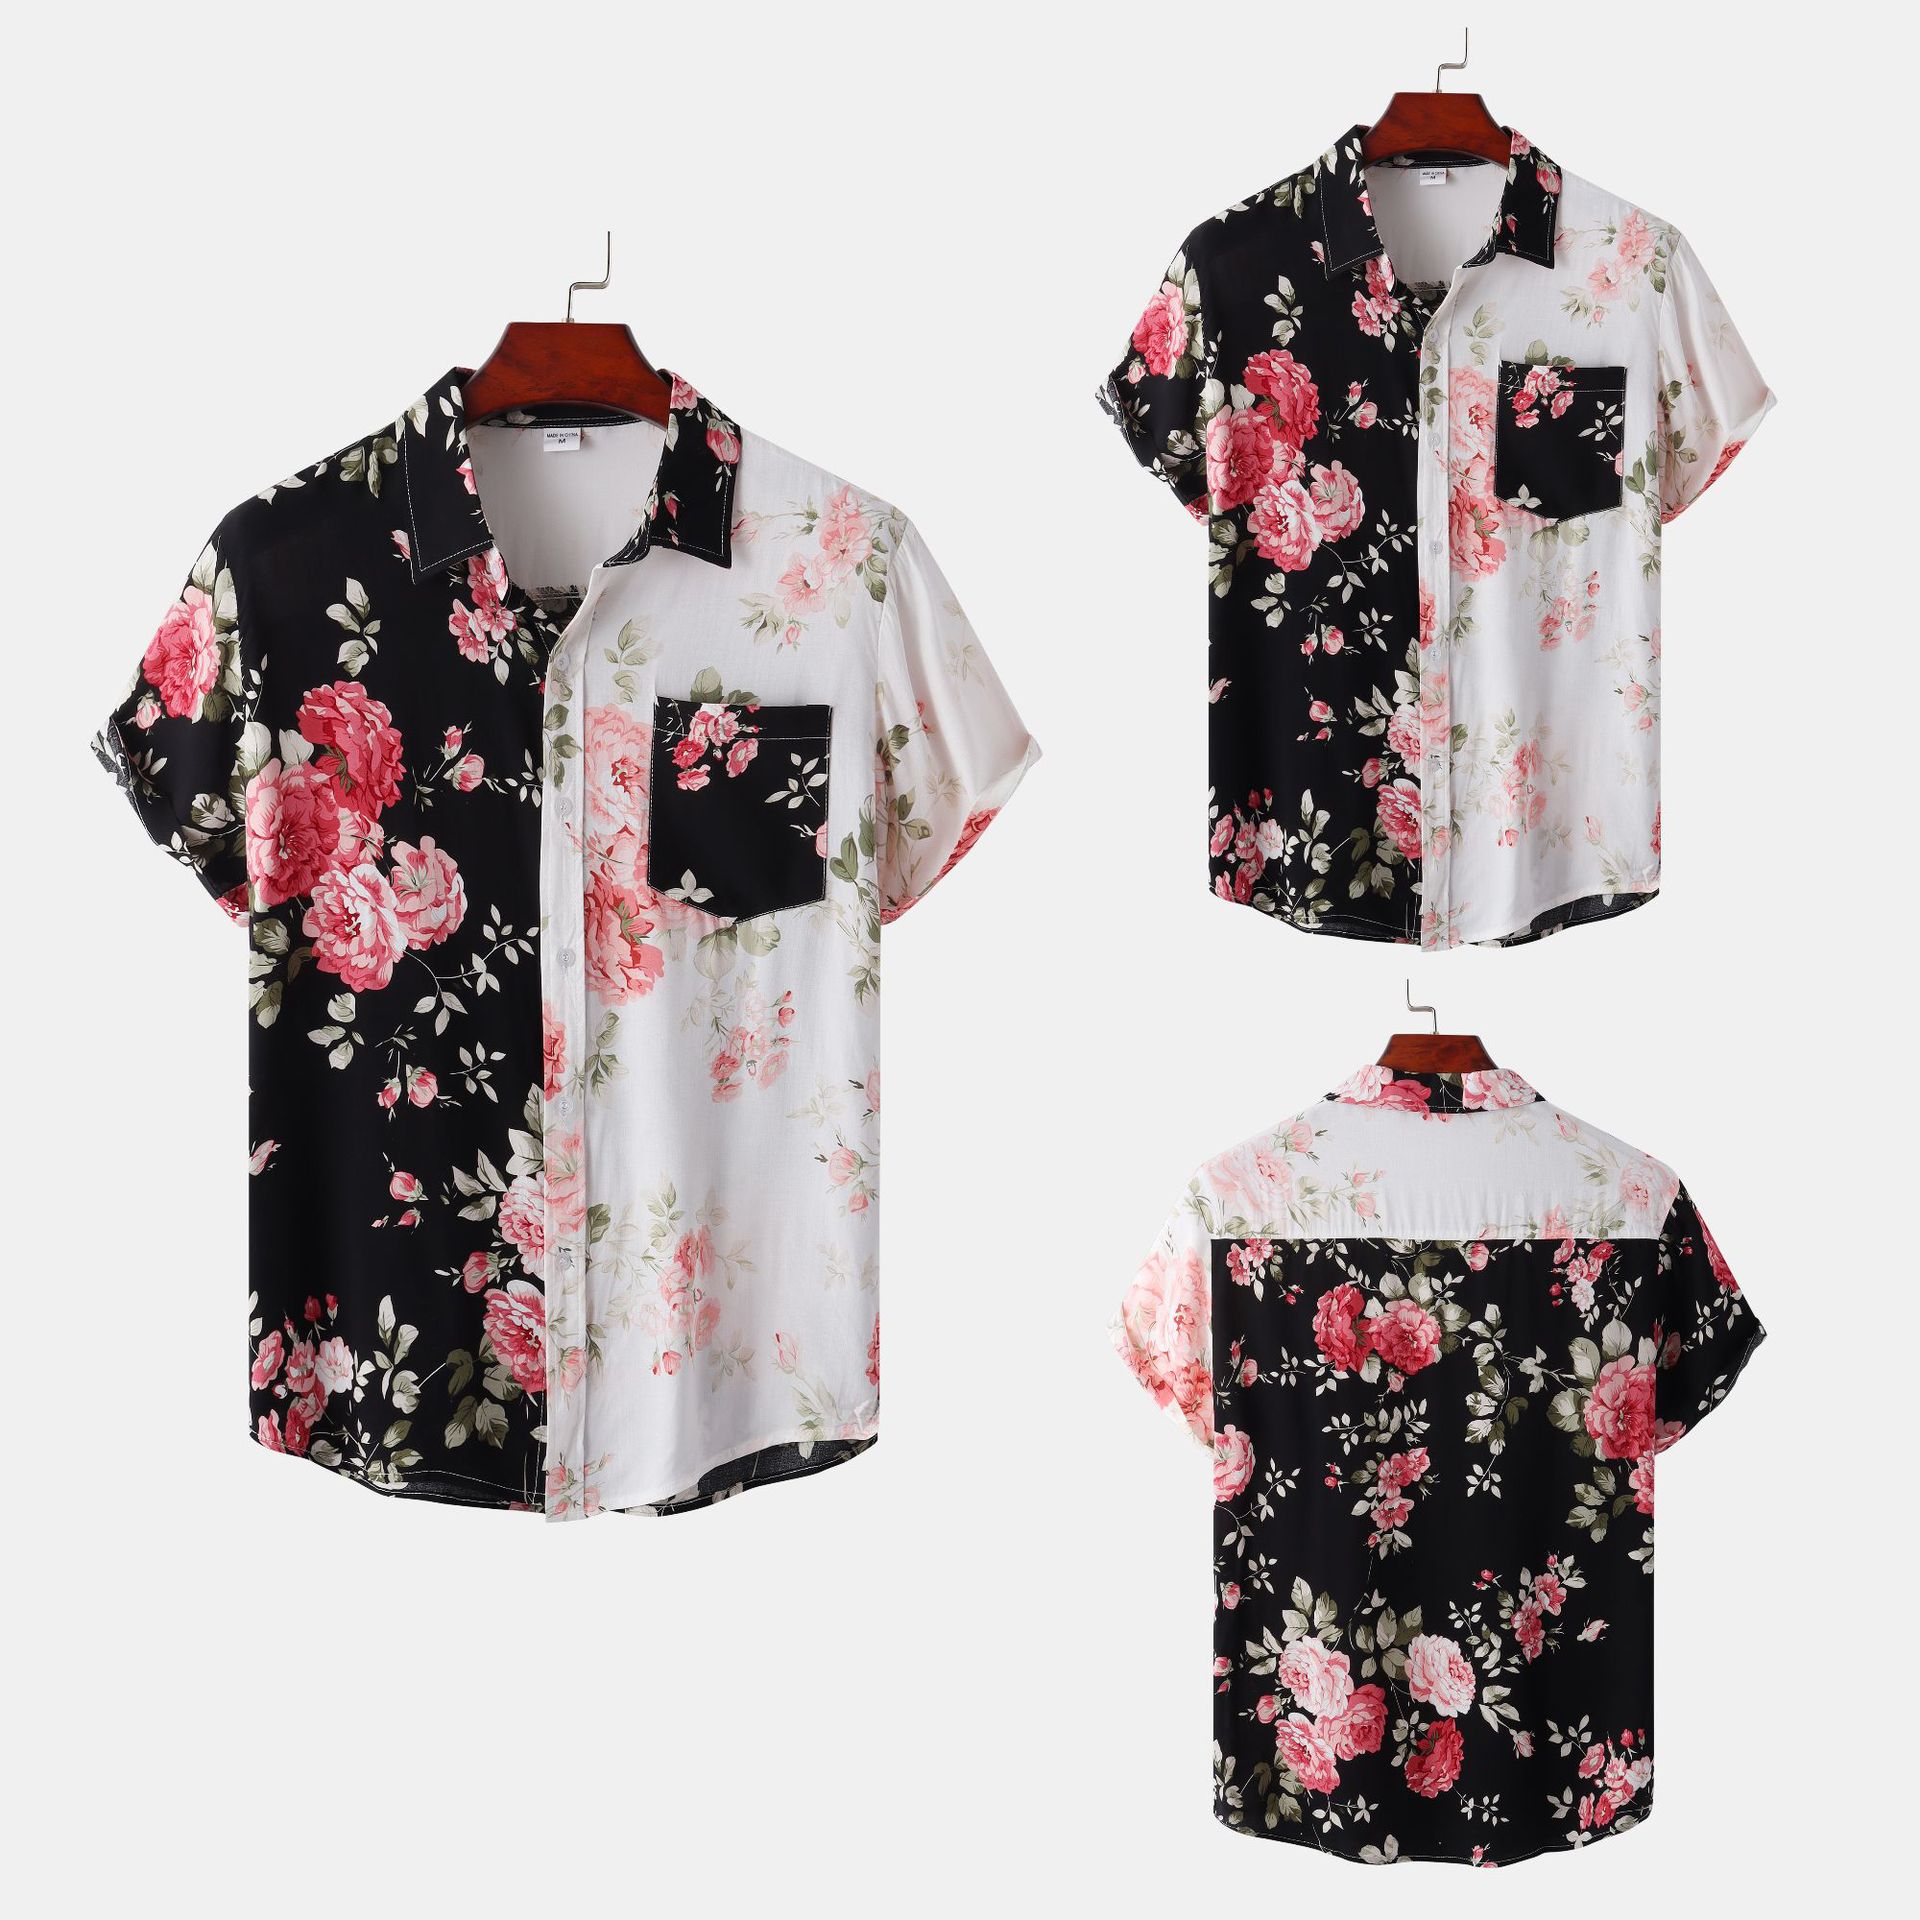 Men's Floral Panel Short Sleeve Shirt